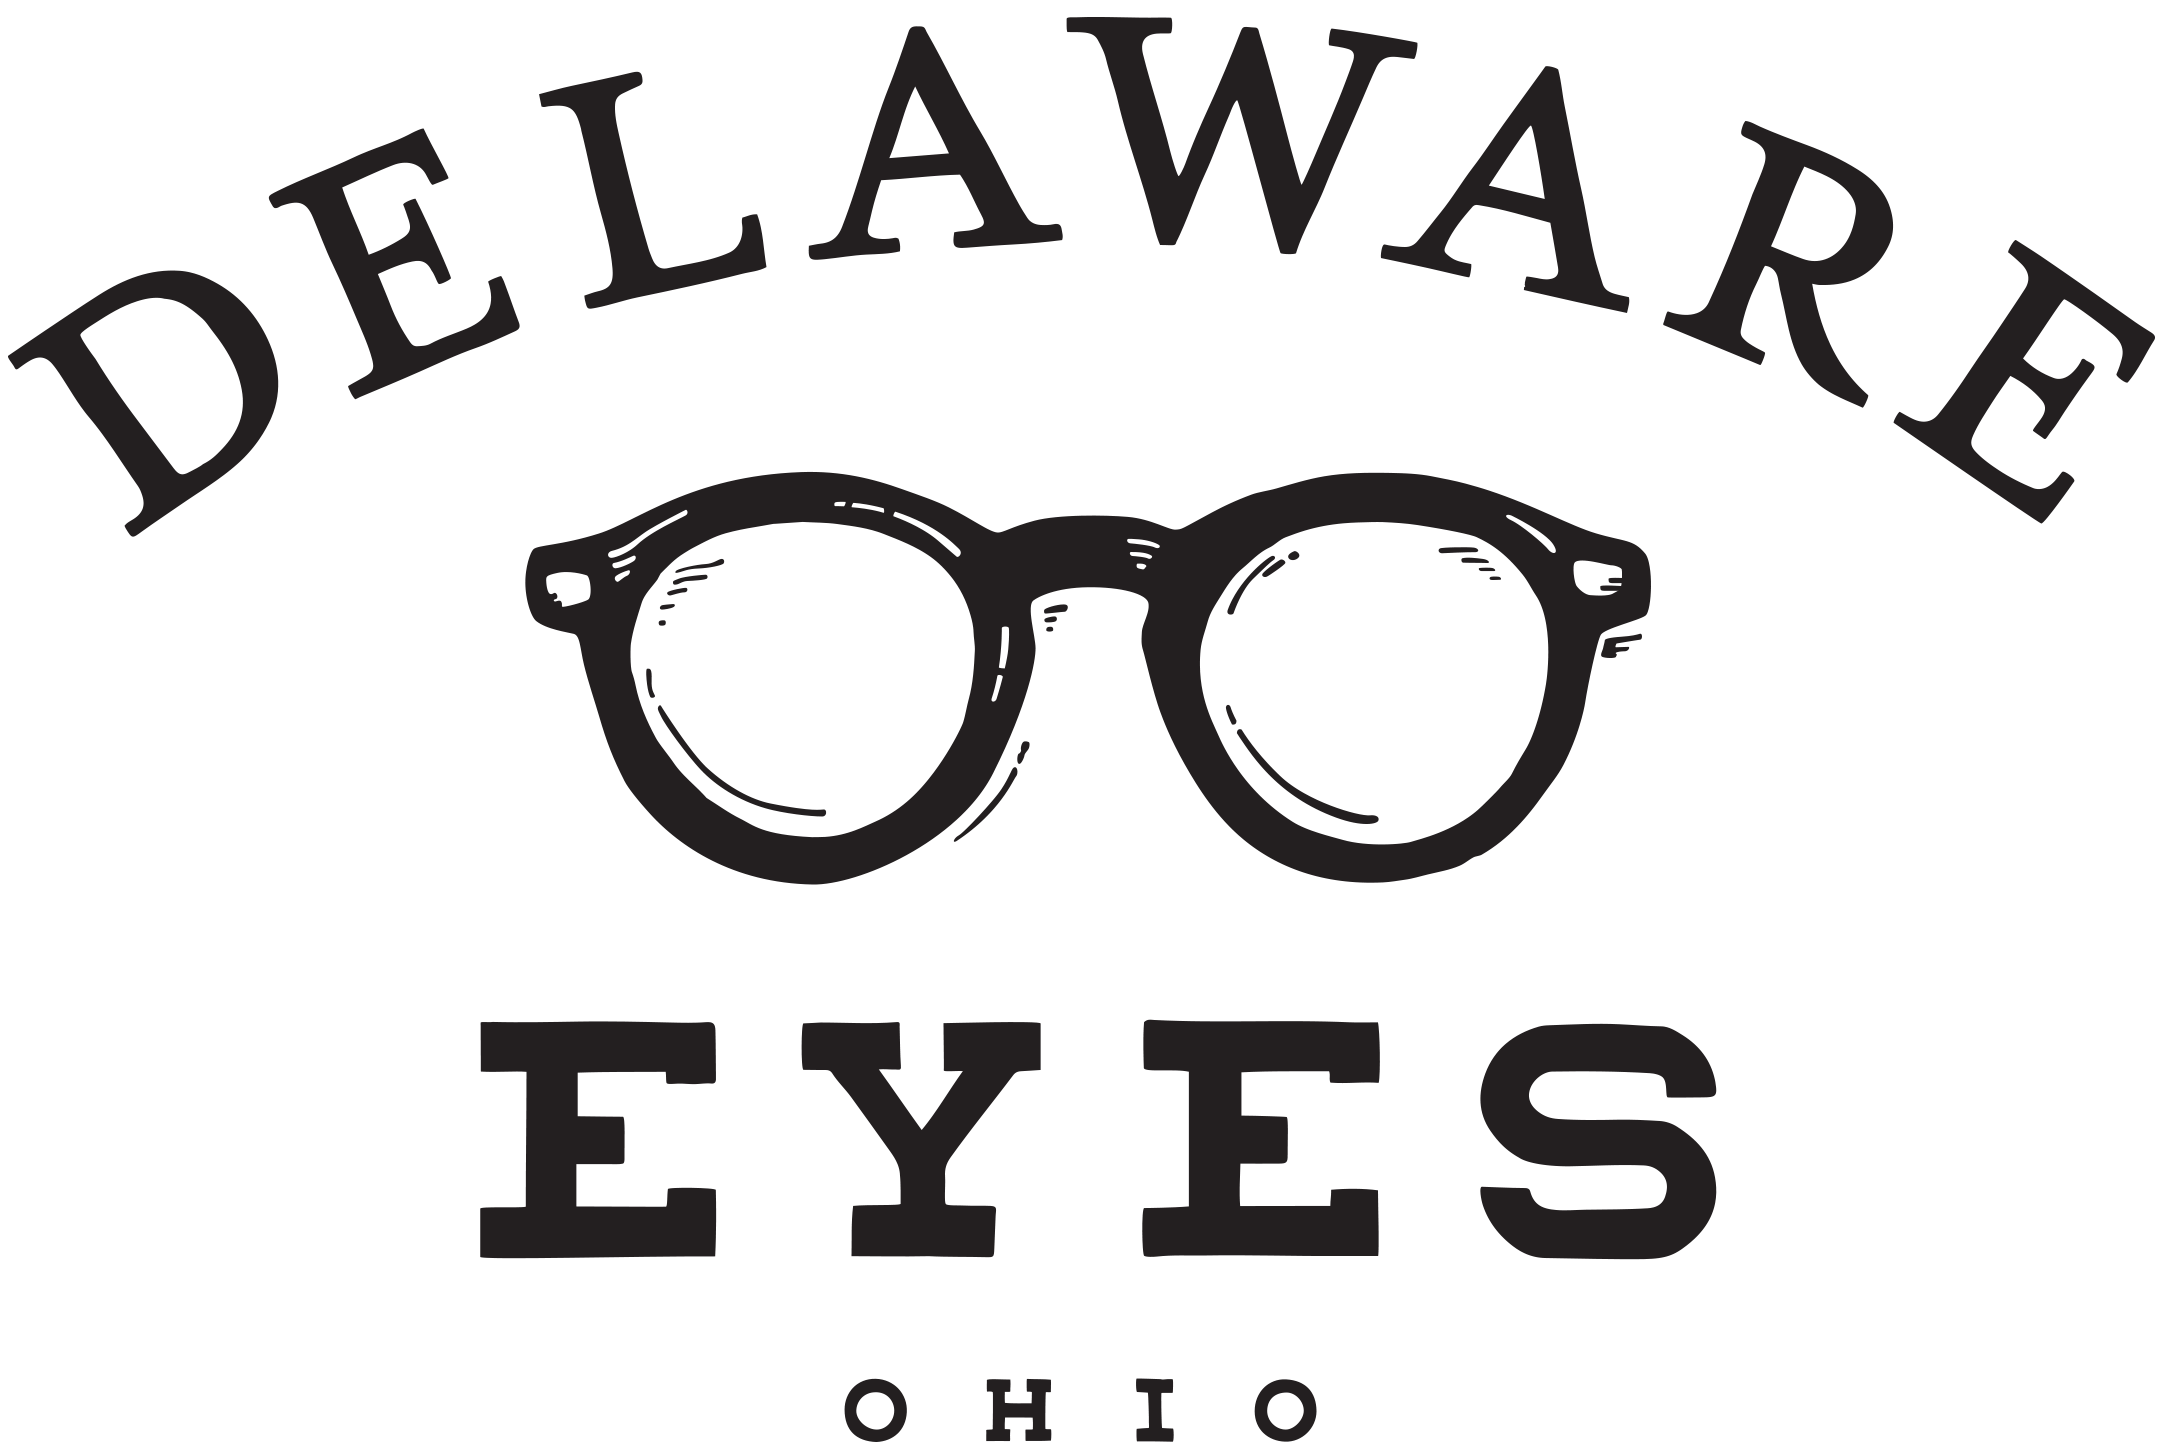 Delaware Eyes